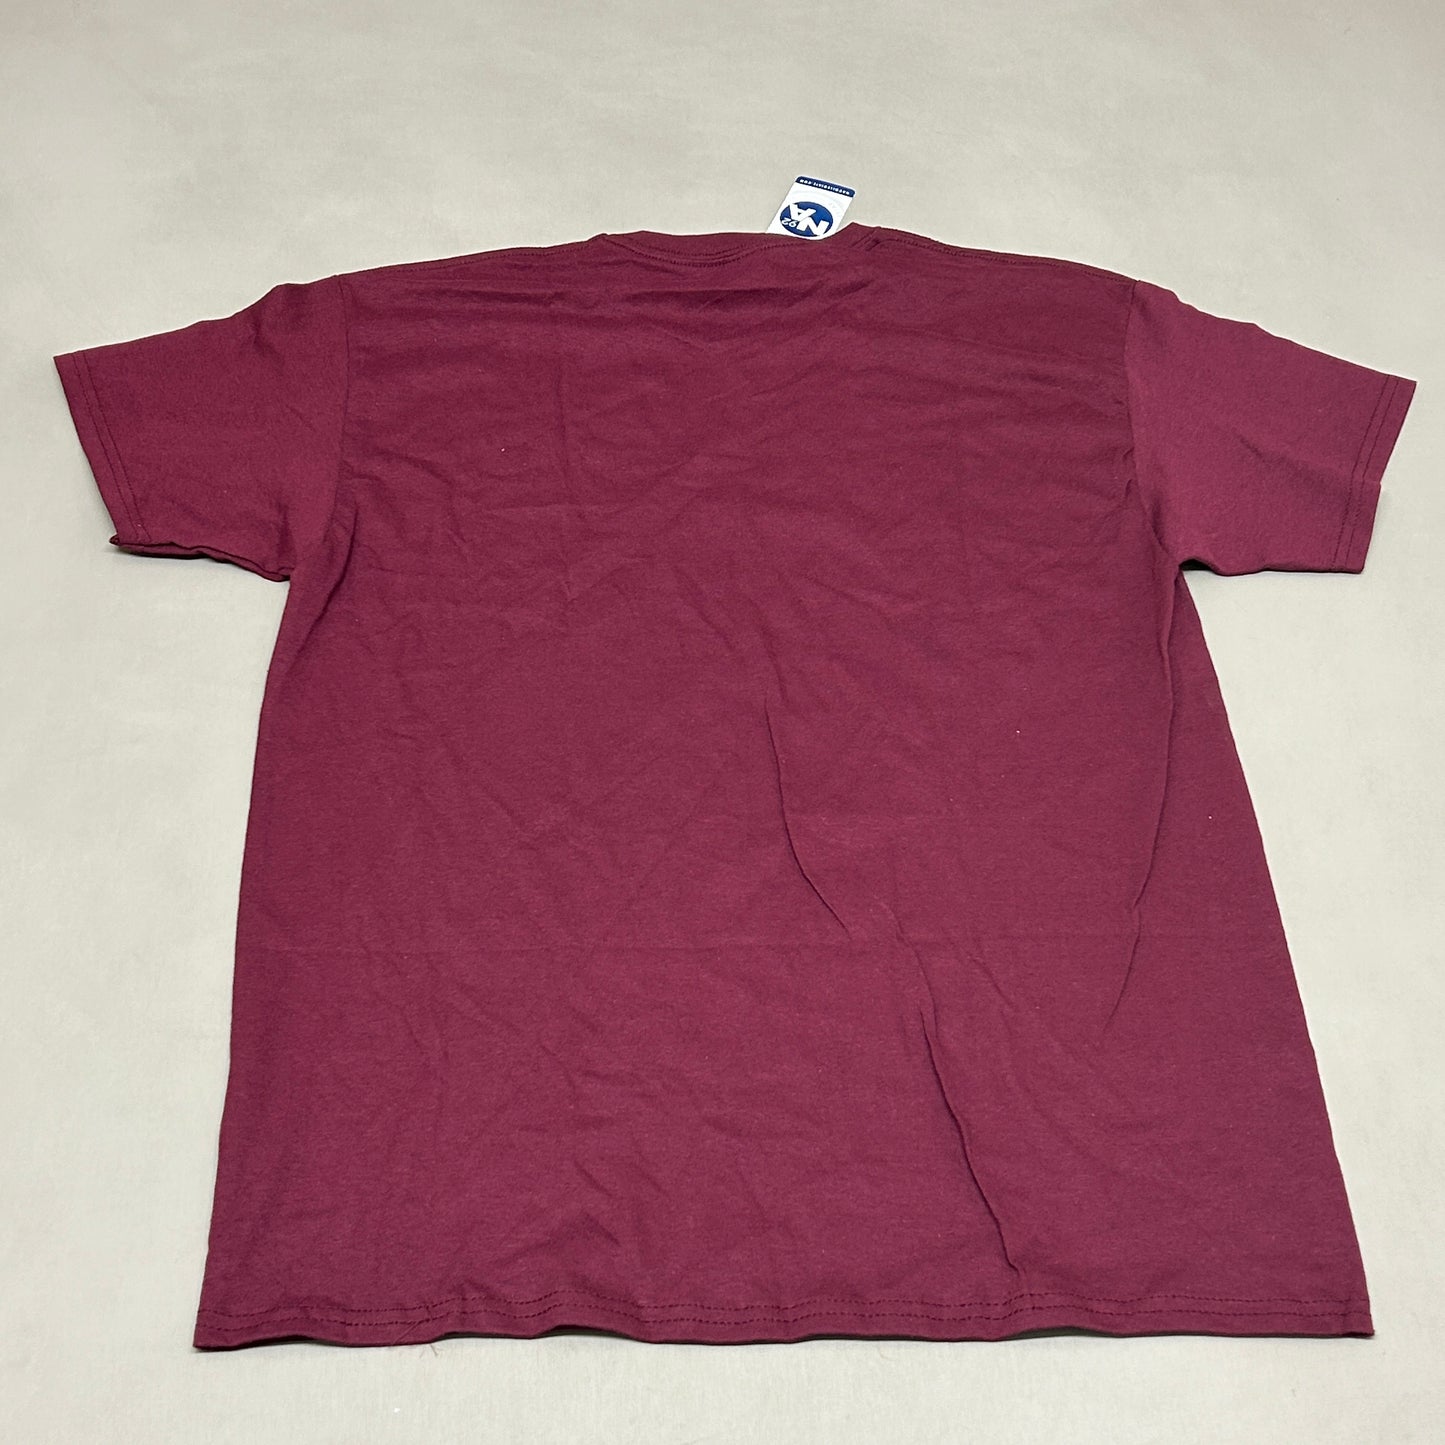 GILDAN Boston College Short Sleeve Cotton Unisex Heritage T-Shirt Sz L Maroon (New)